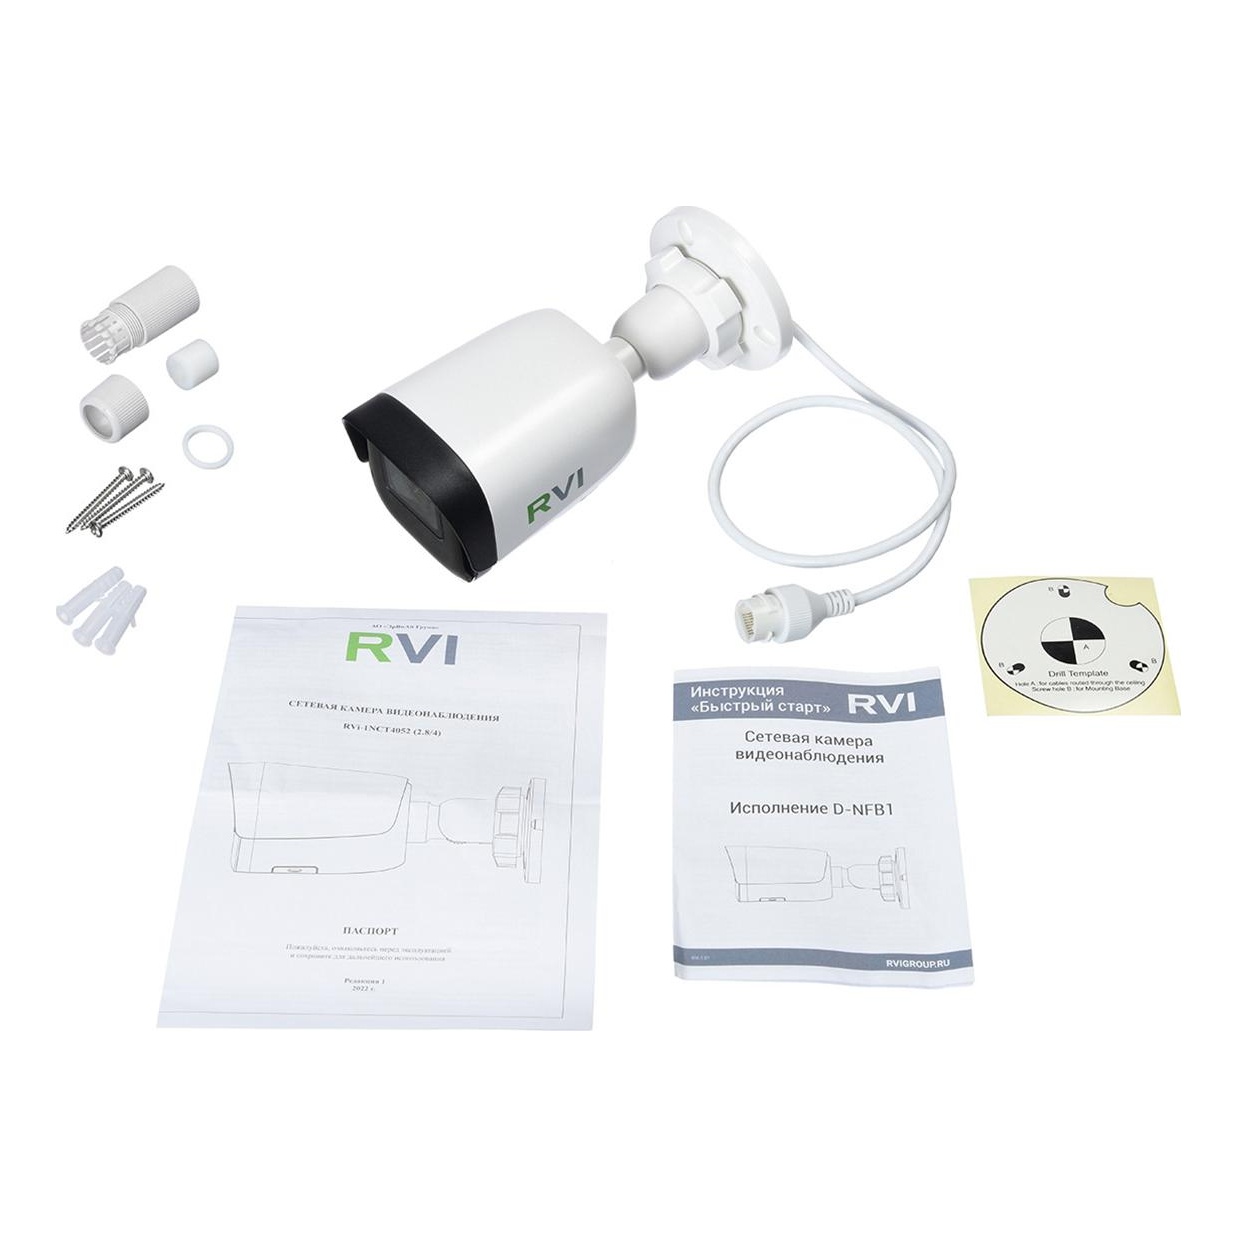 RVi-1NCT2022 (2.8) white IP видеокамера